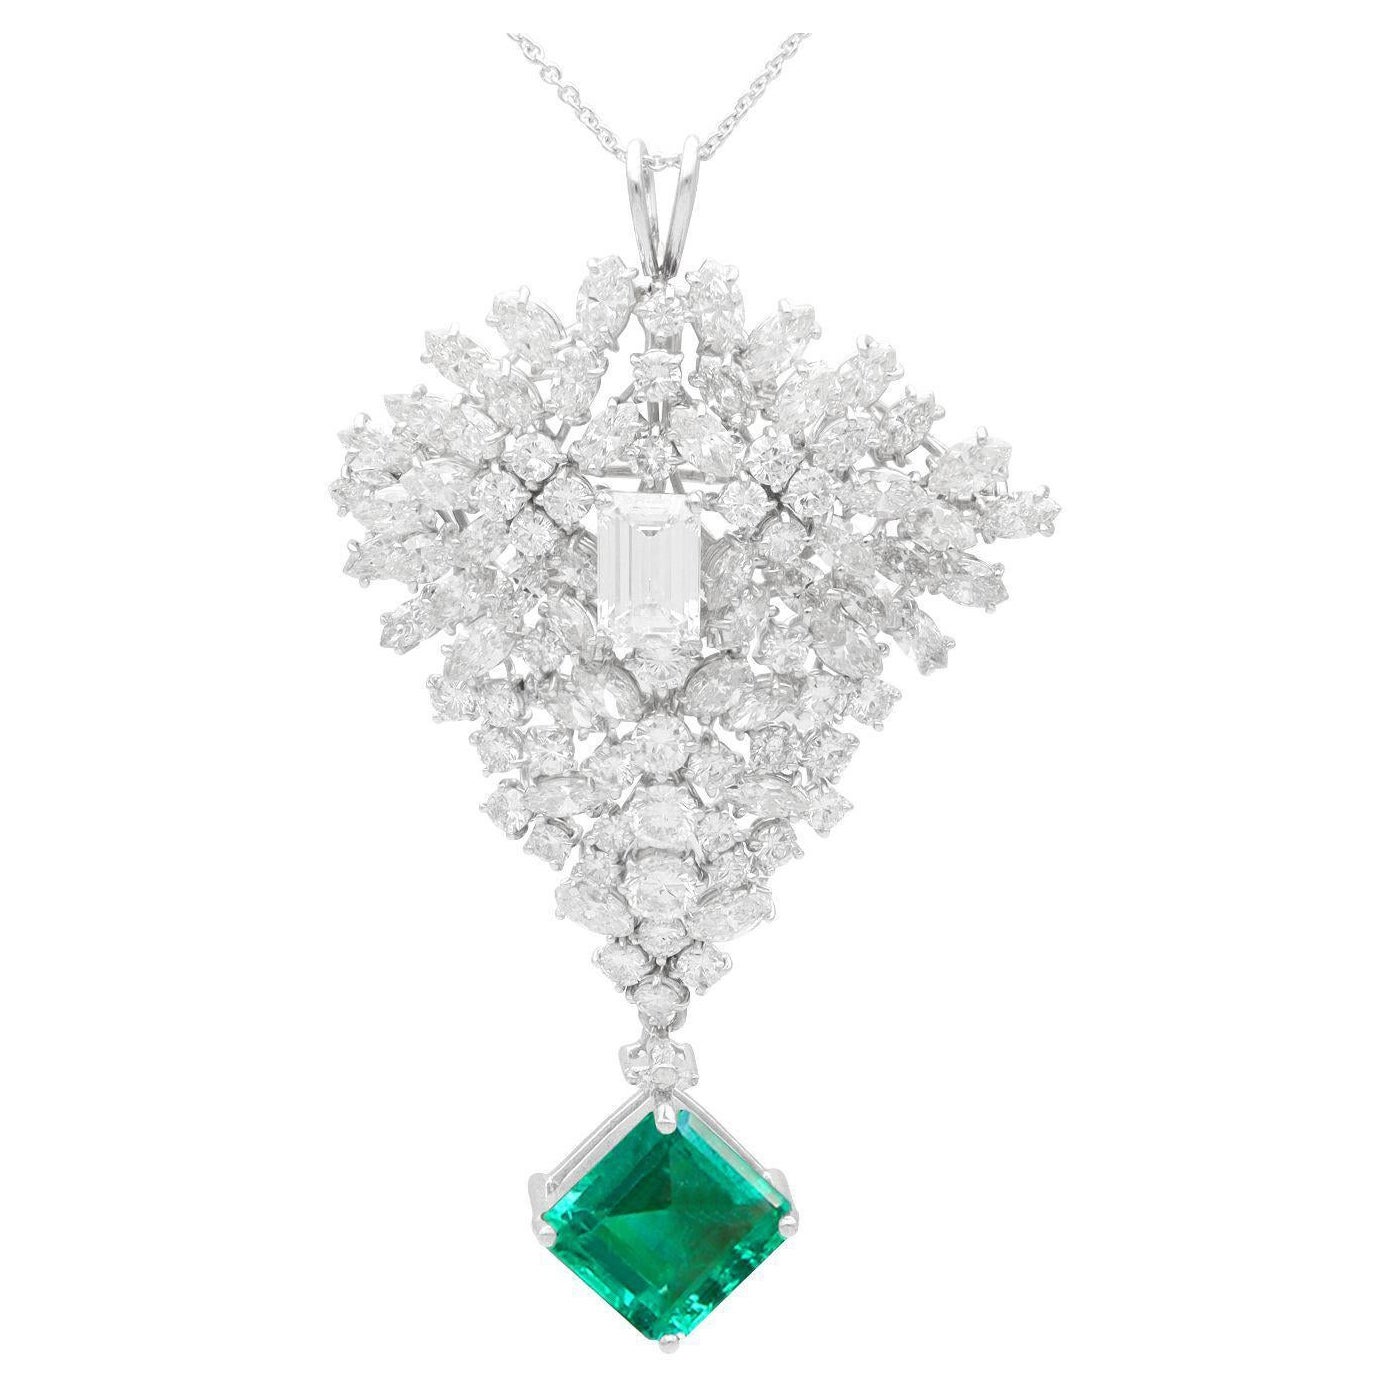 7.47 Carat Zambian Emerald and 14.50 Carat Diamond White Gold Brooch / Pendant For Sale